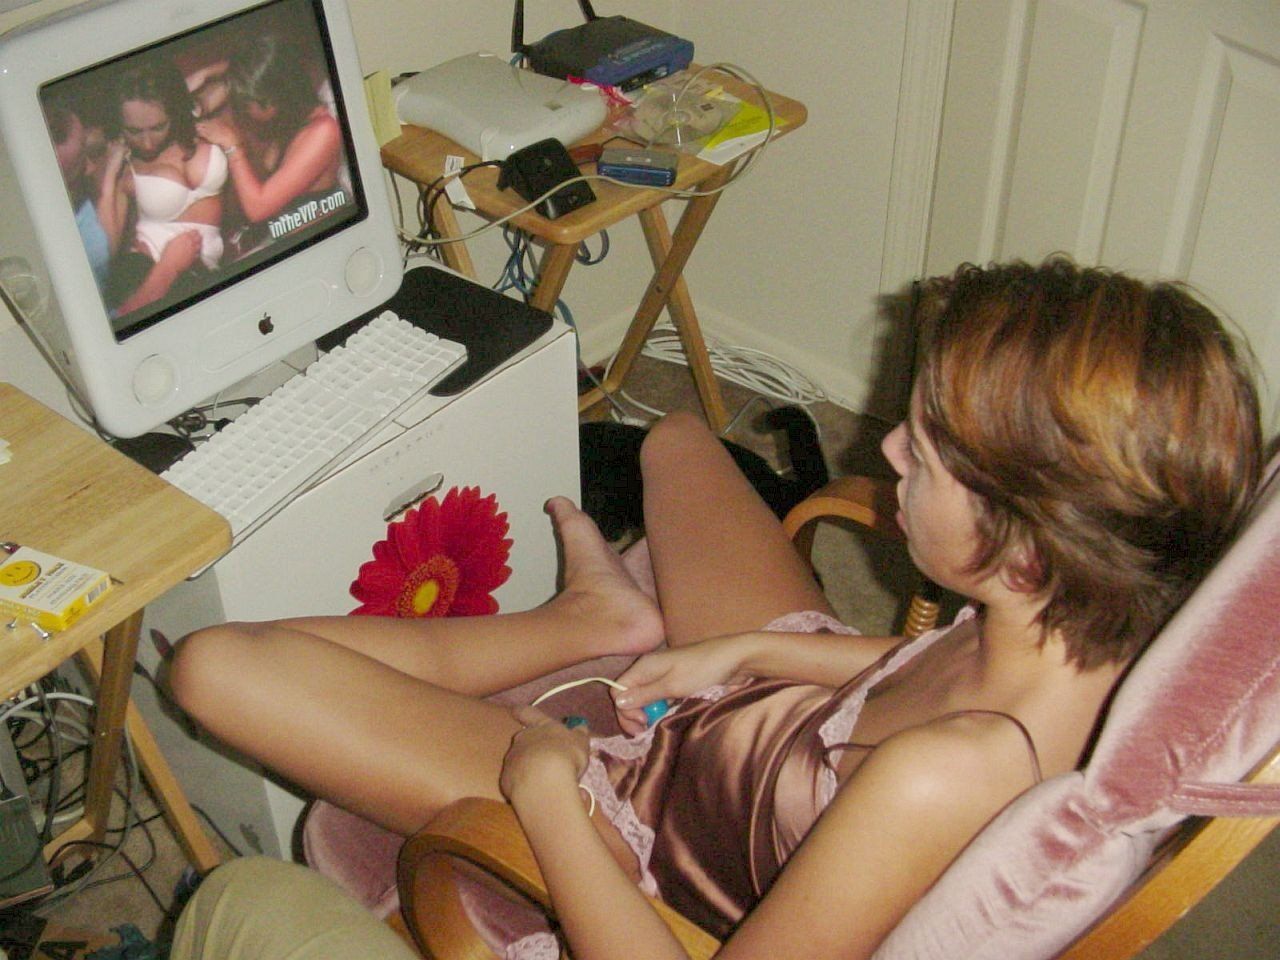 Girls masturbate and watch porn